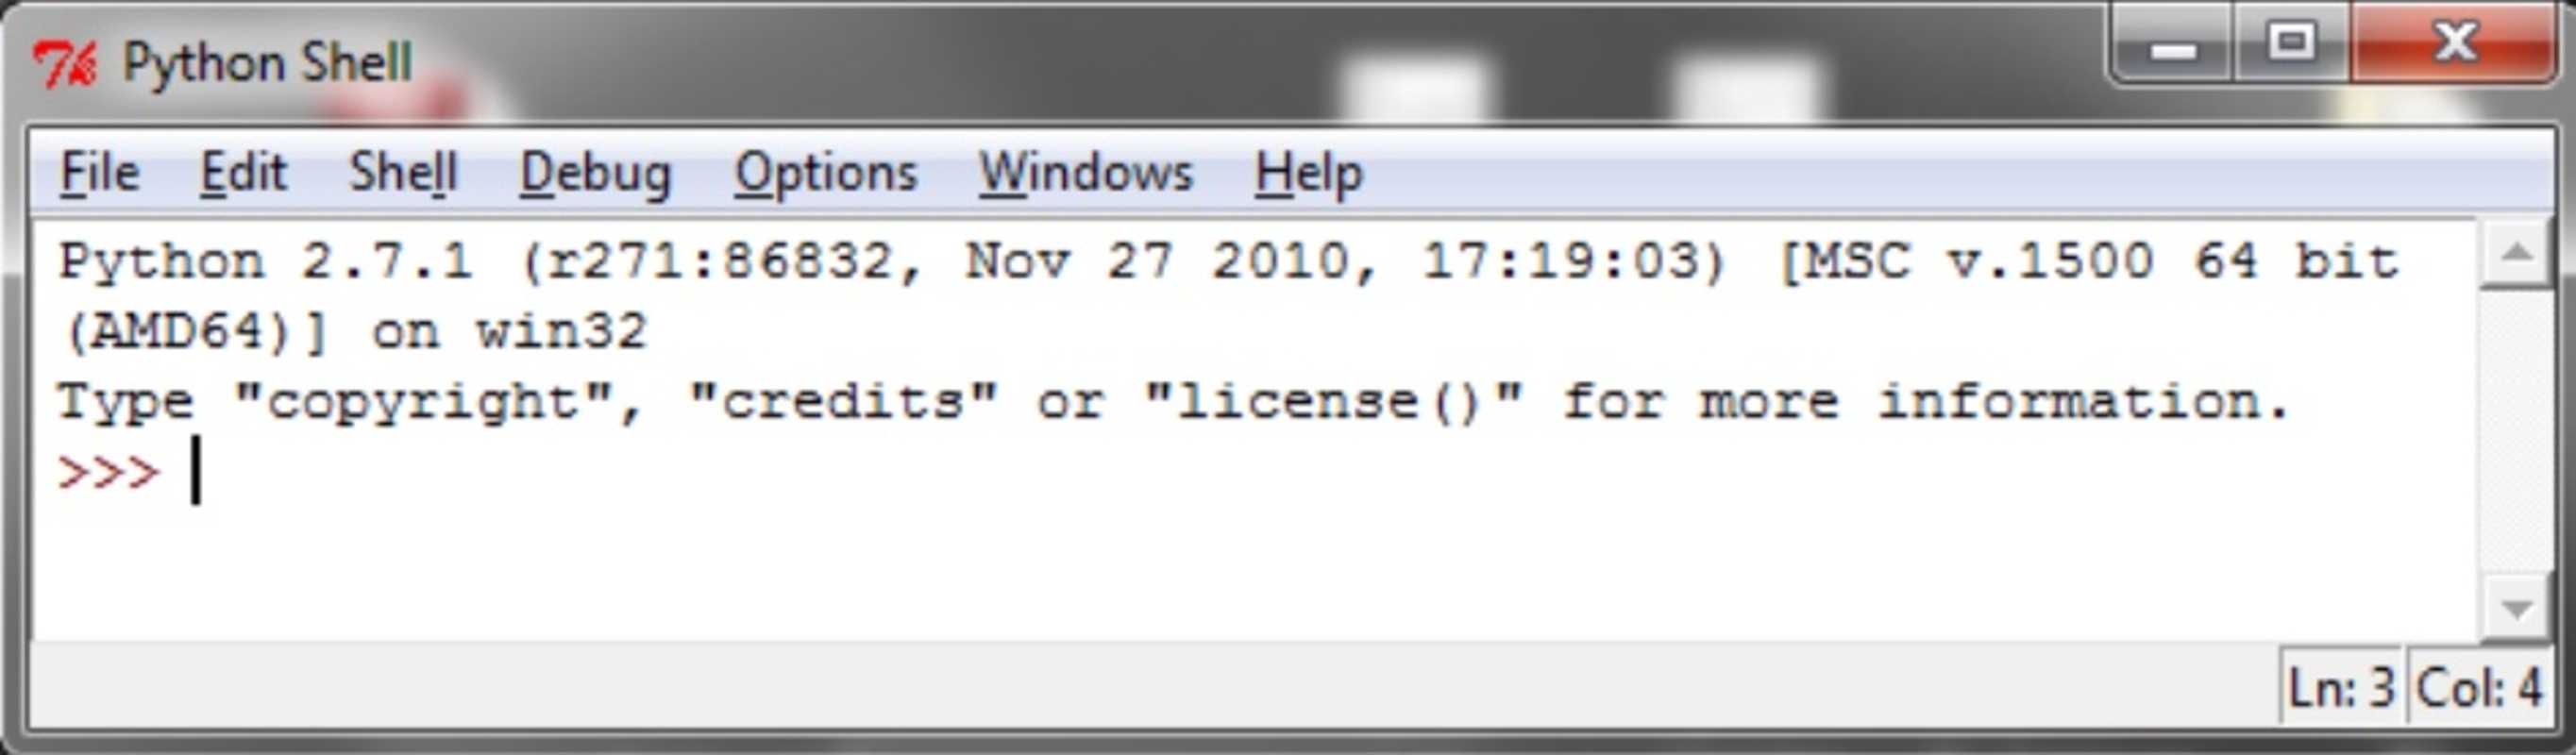 Python 3.12.0 for Windows Screenshot 1